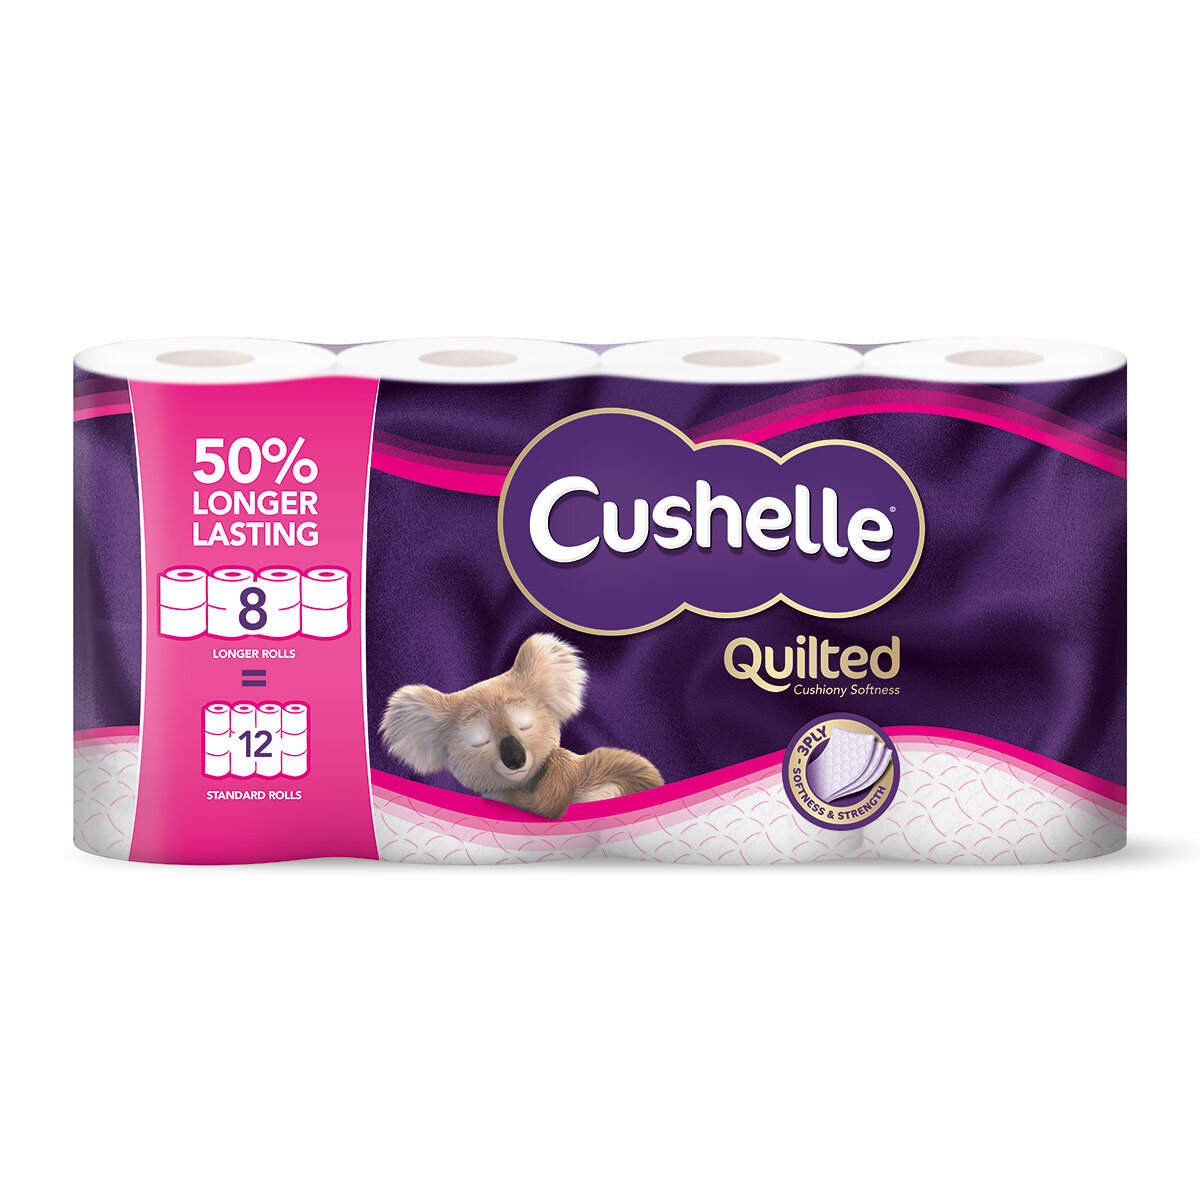 Cushelle Quilted 3-Ply Longer Rolls Toilet Tissue, 32 Rolls